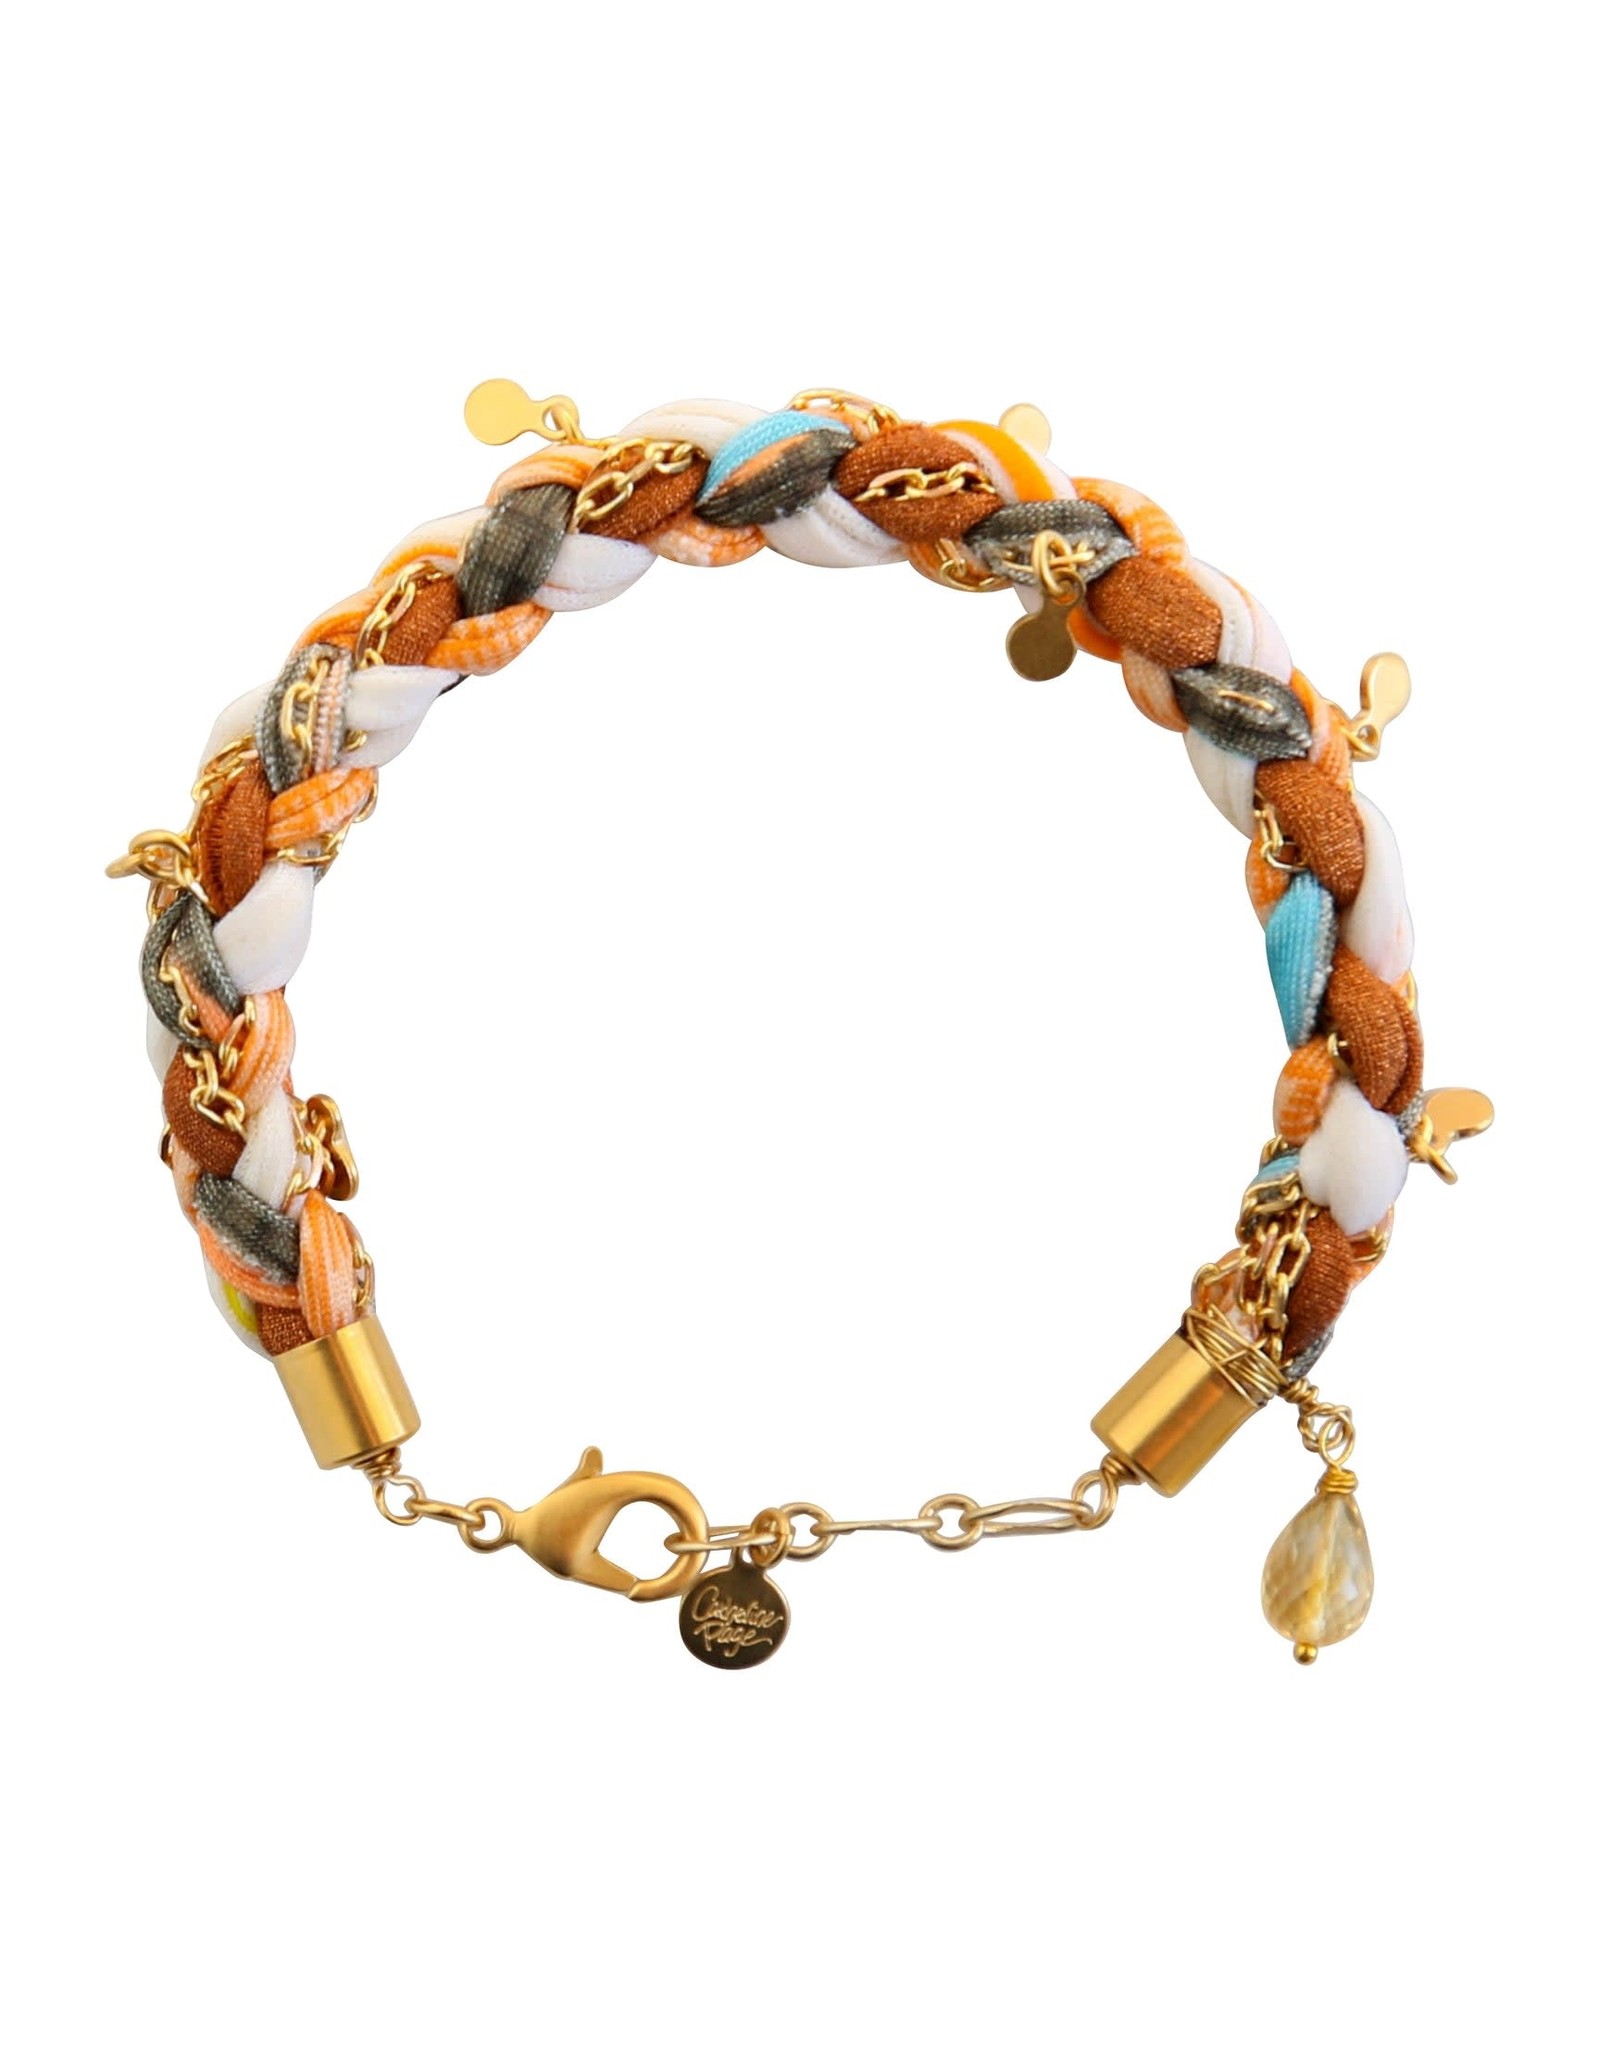 Catherine Page Jewelry Confetti Bracelet